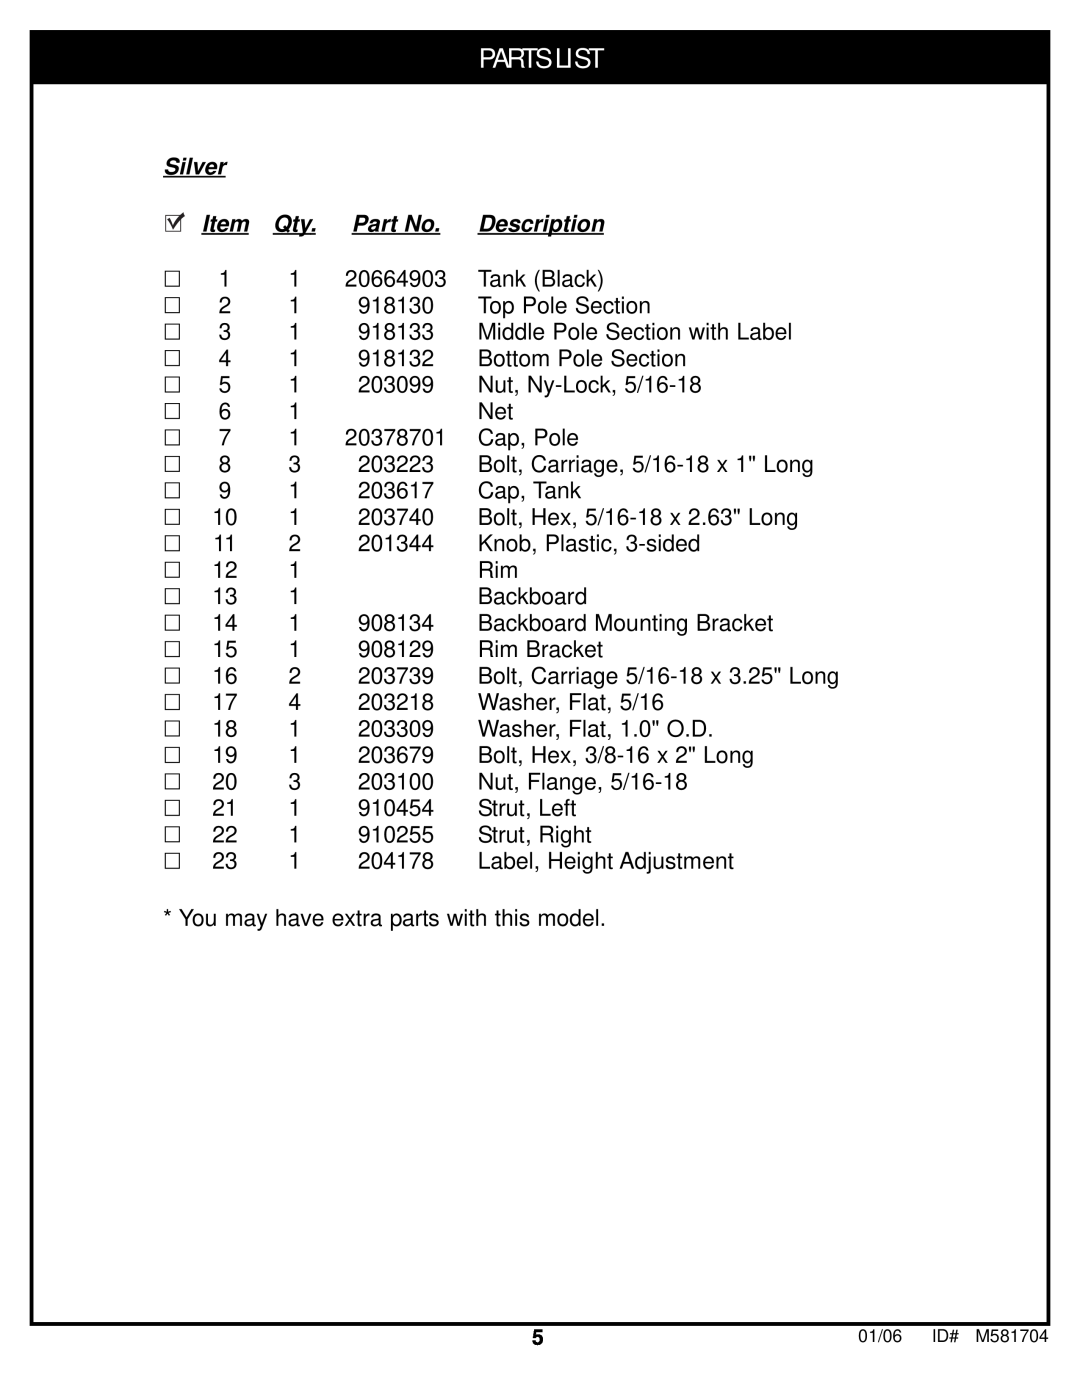 Huffy M581704 manual Parts List, Silver, Description 